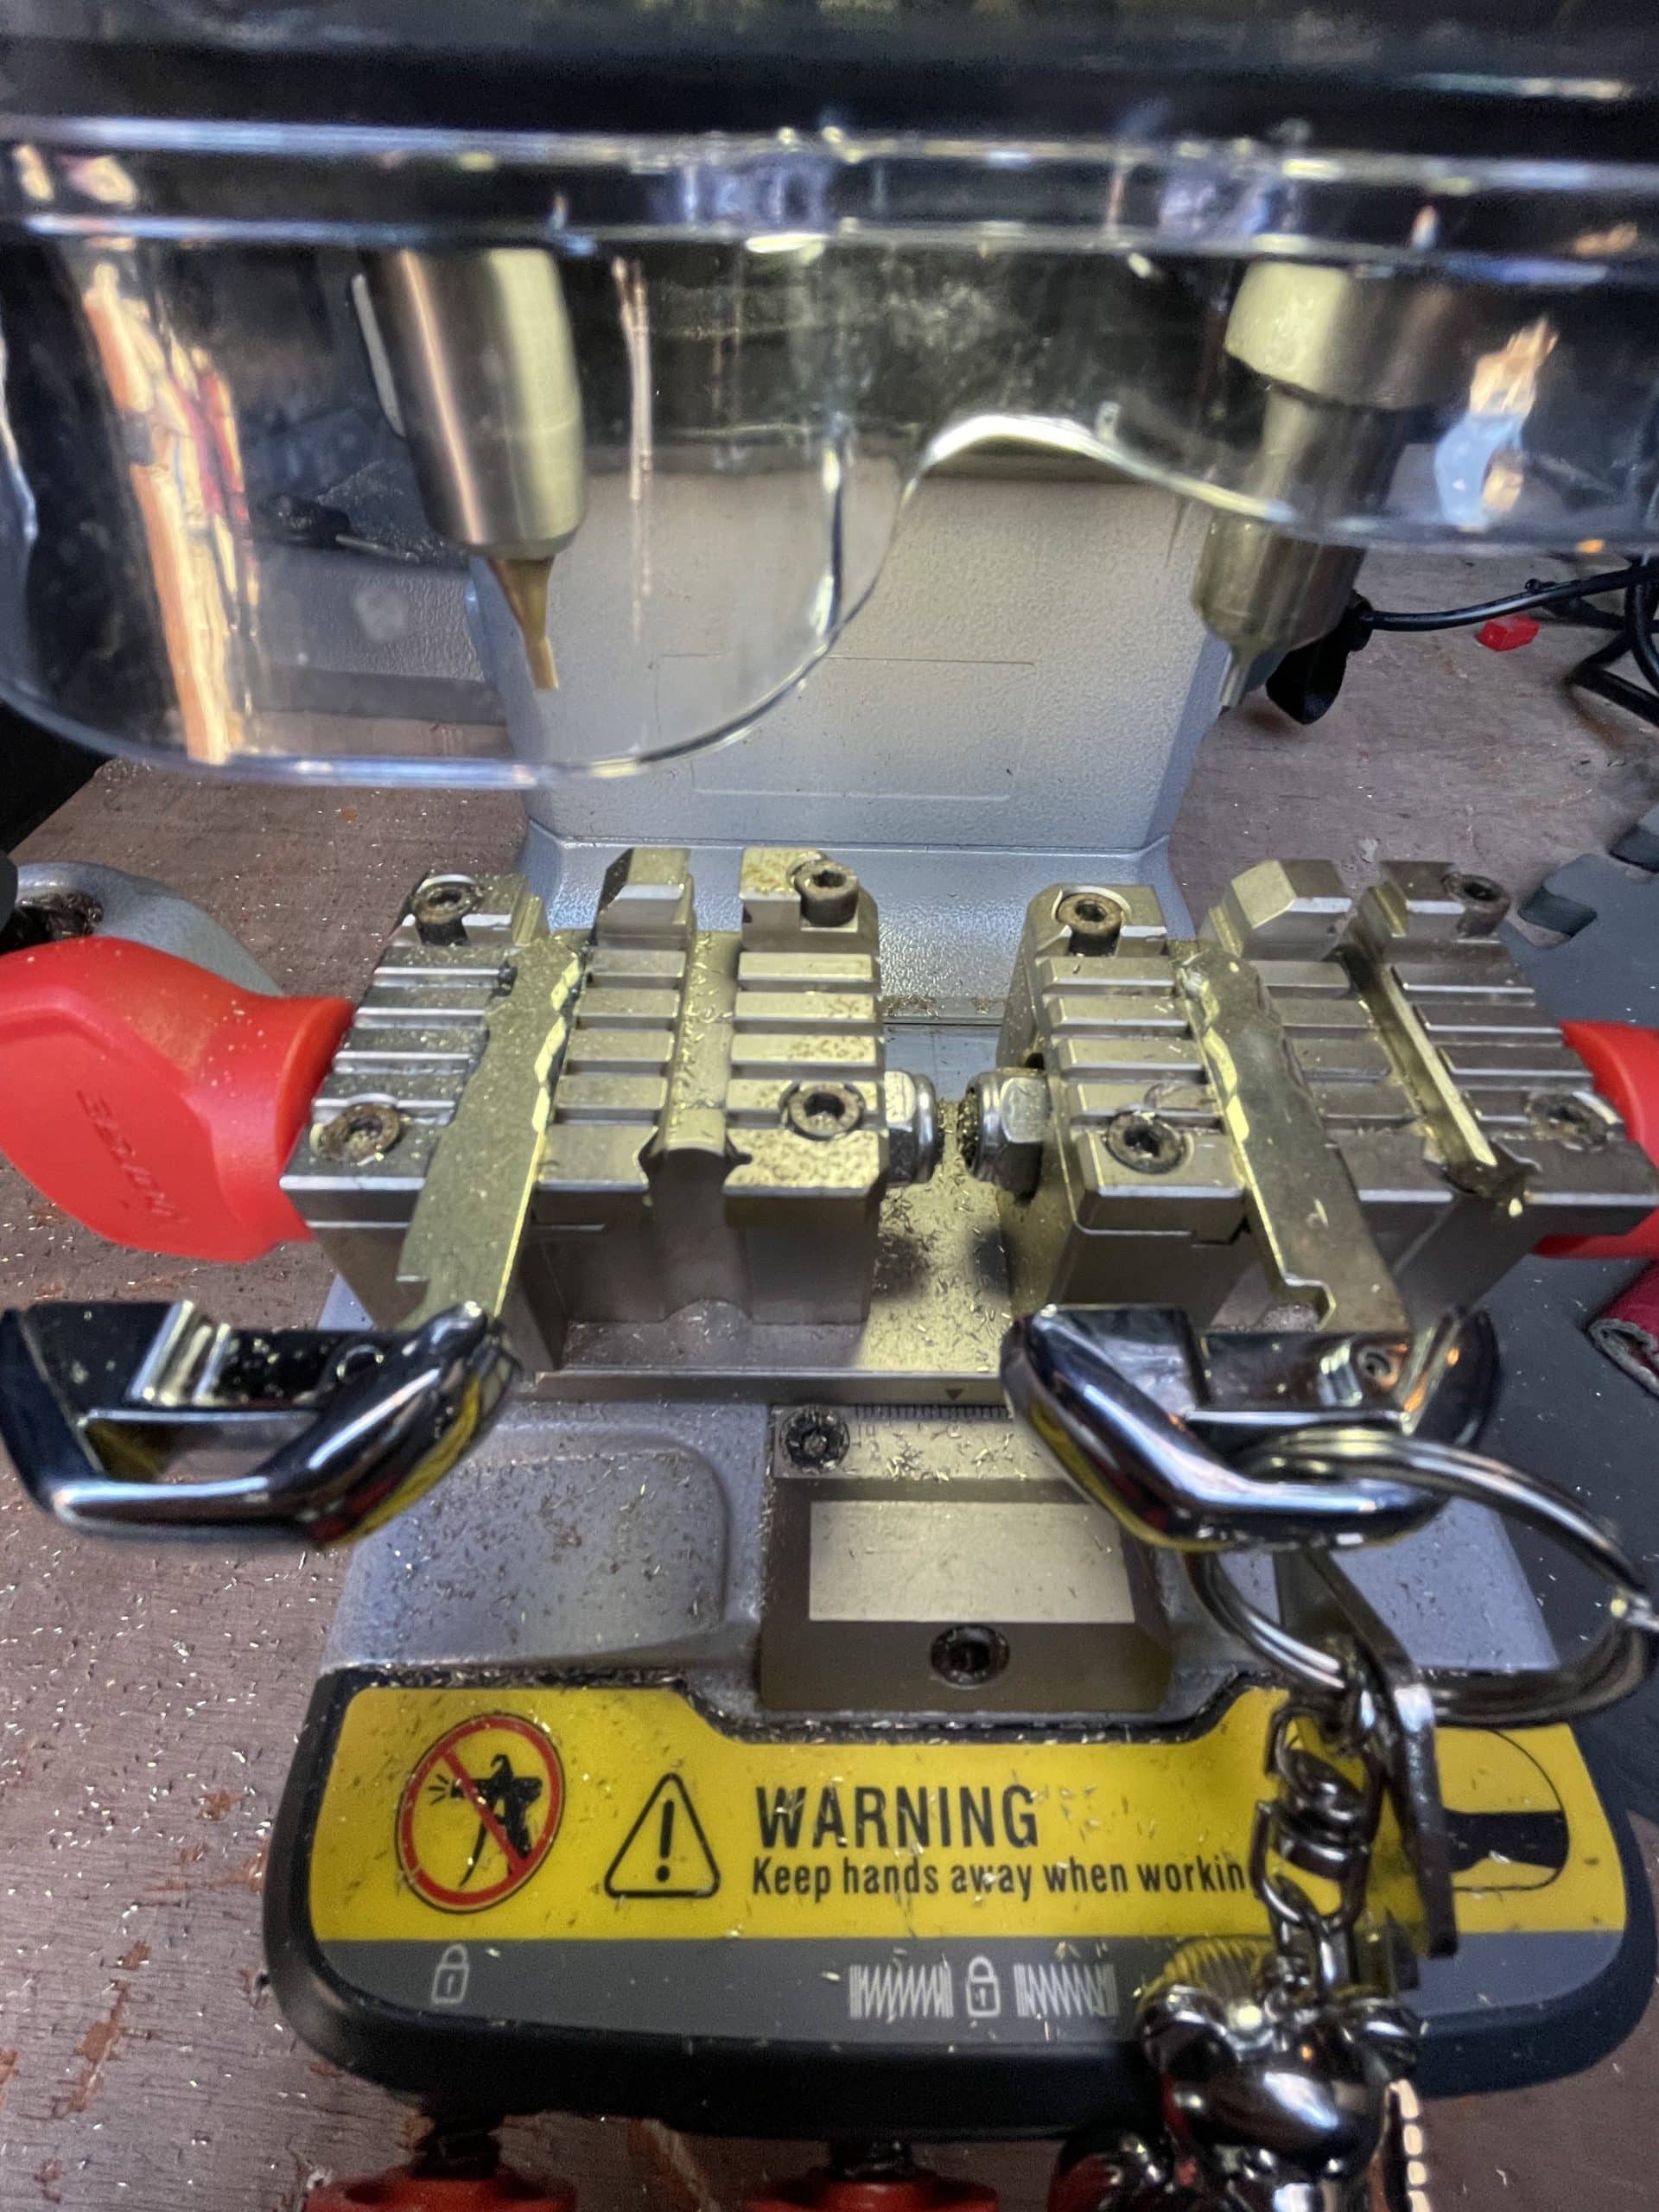 key cutting
auto locksmith norwich